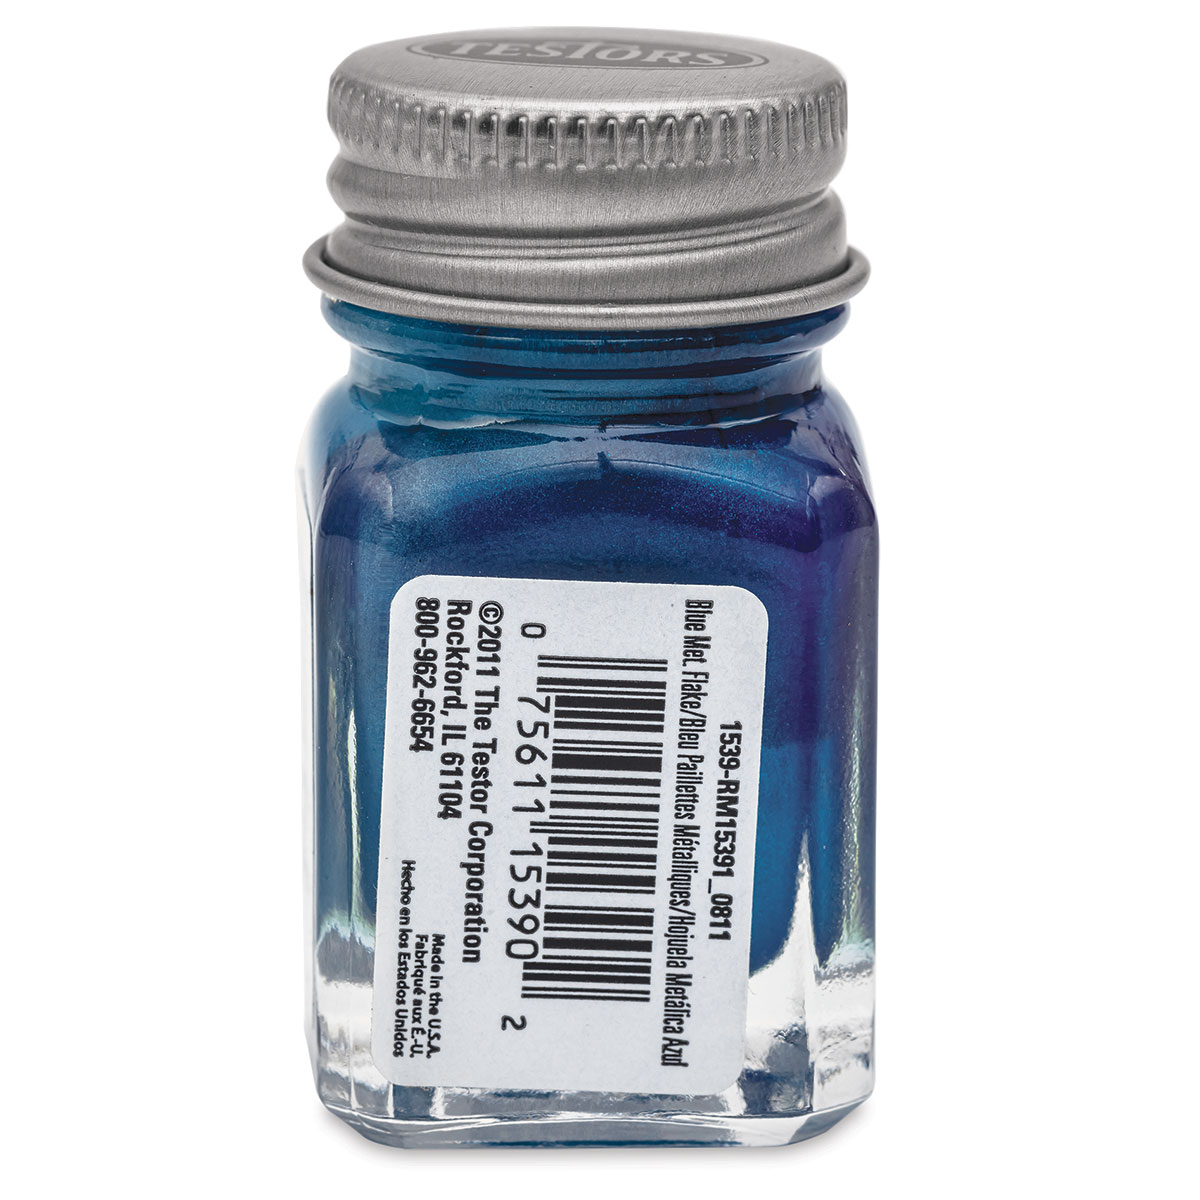 Testors 1108 Gloss Light Blue Enamel 1/4 oz Paint Bottle